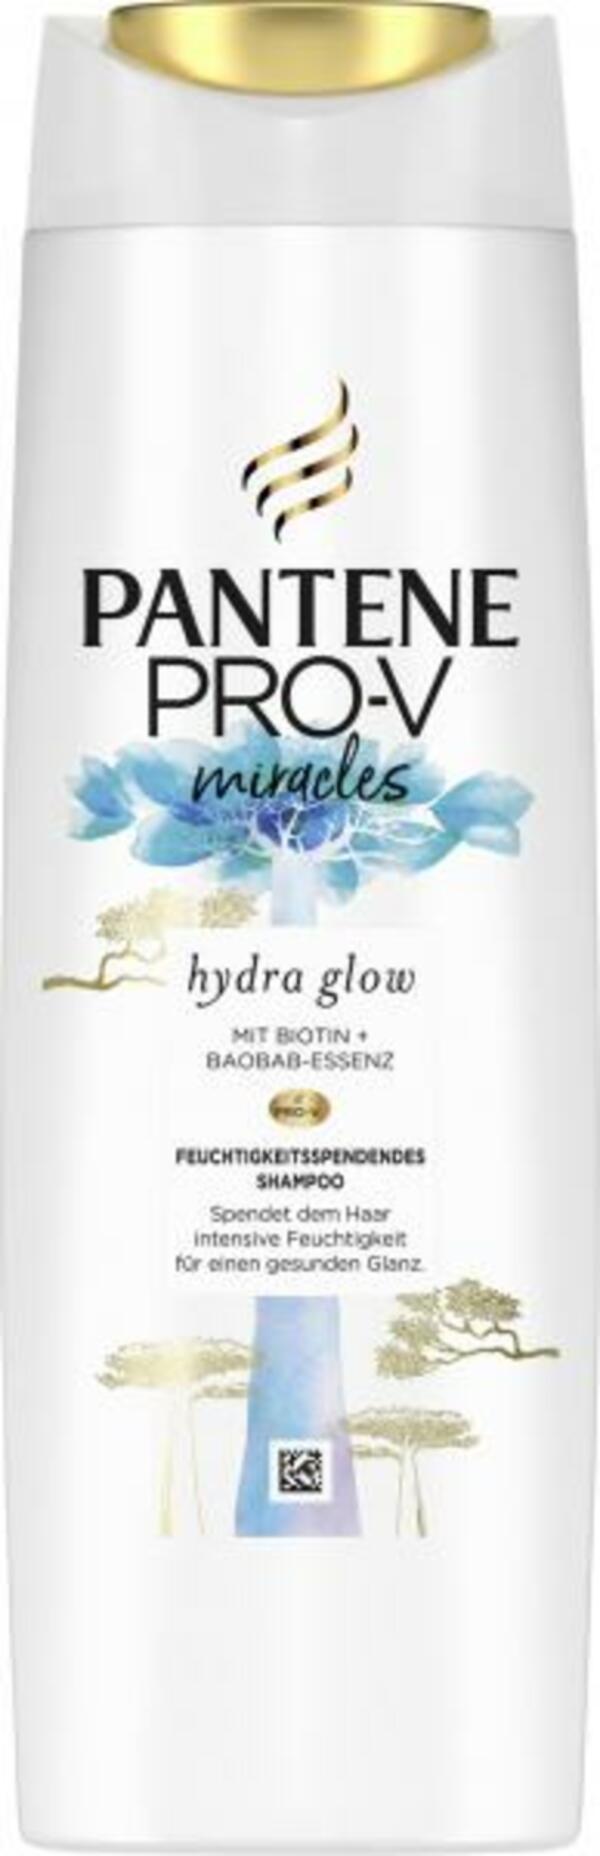 Bild 1 von Pantene Pro-V Miracles Hydra Glow Shampoo